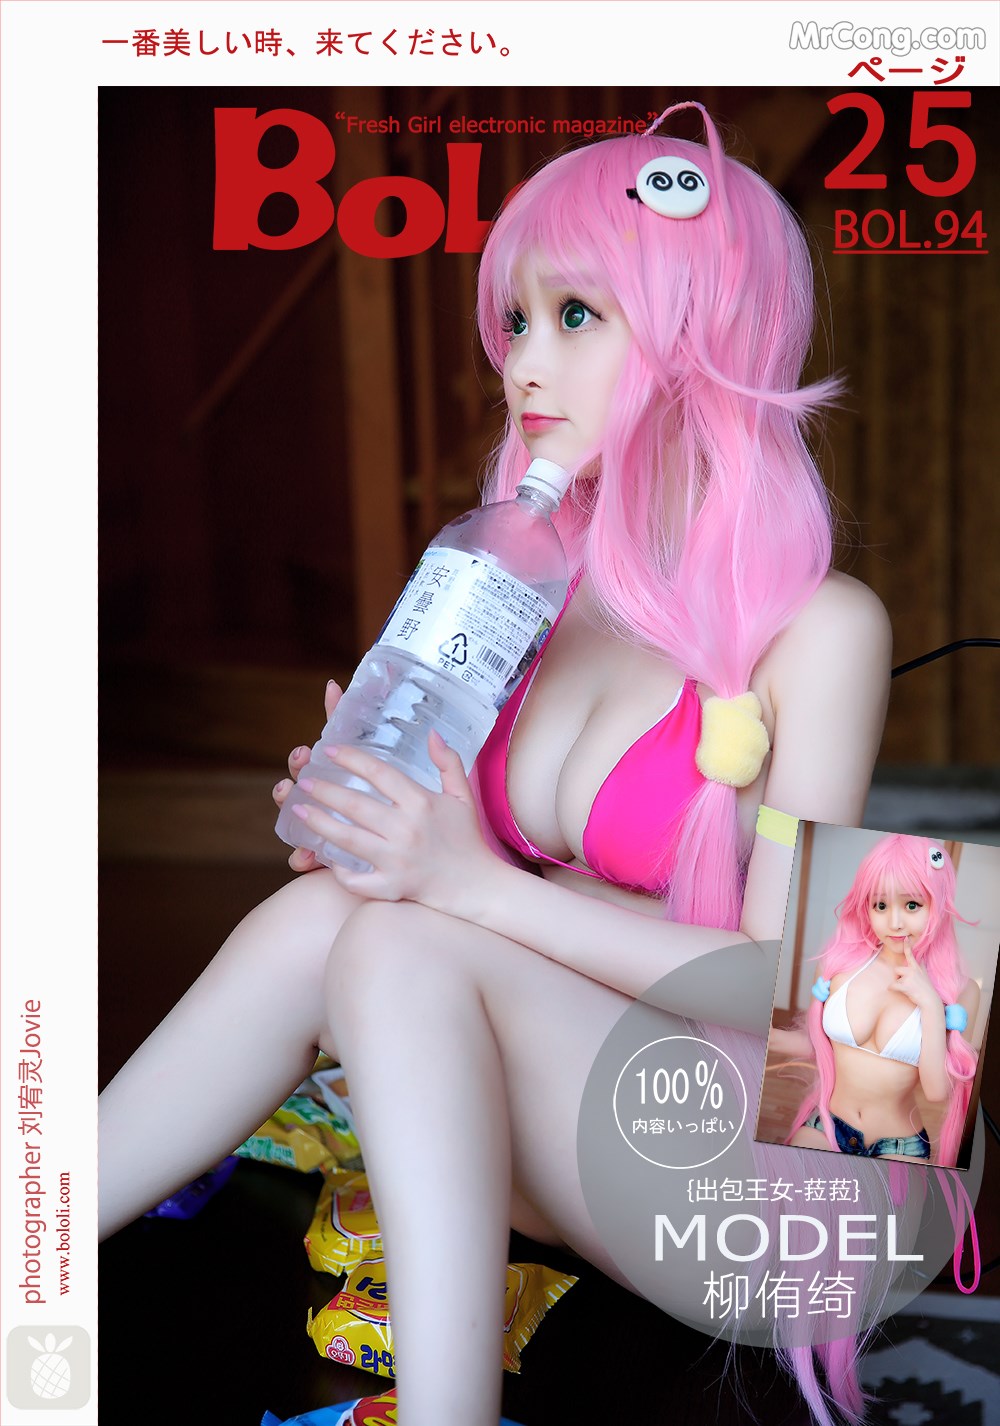 BoLoli 2017-07-31 Vol.094: Model Liu You Qi Sevenbaby (柳 侑 绮 Sevenbaby) (26 photos) photo 1-0